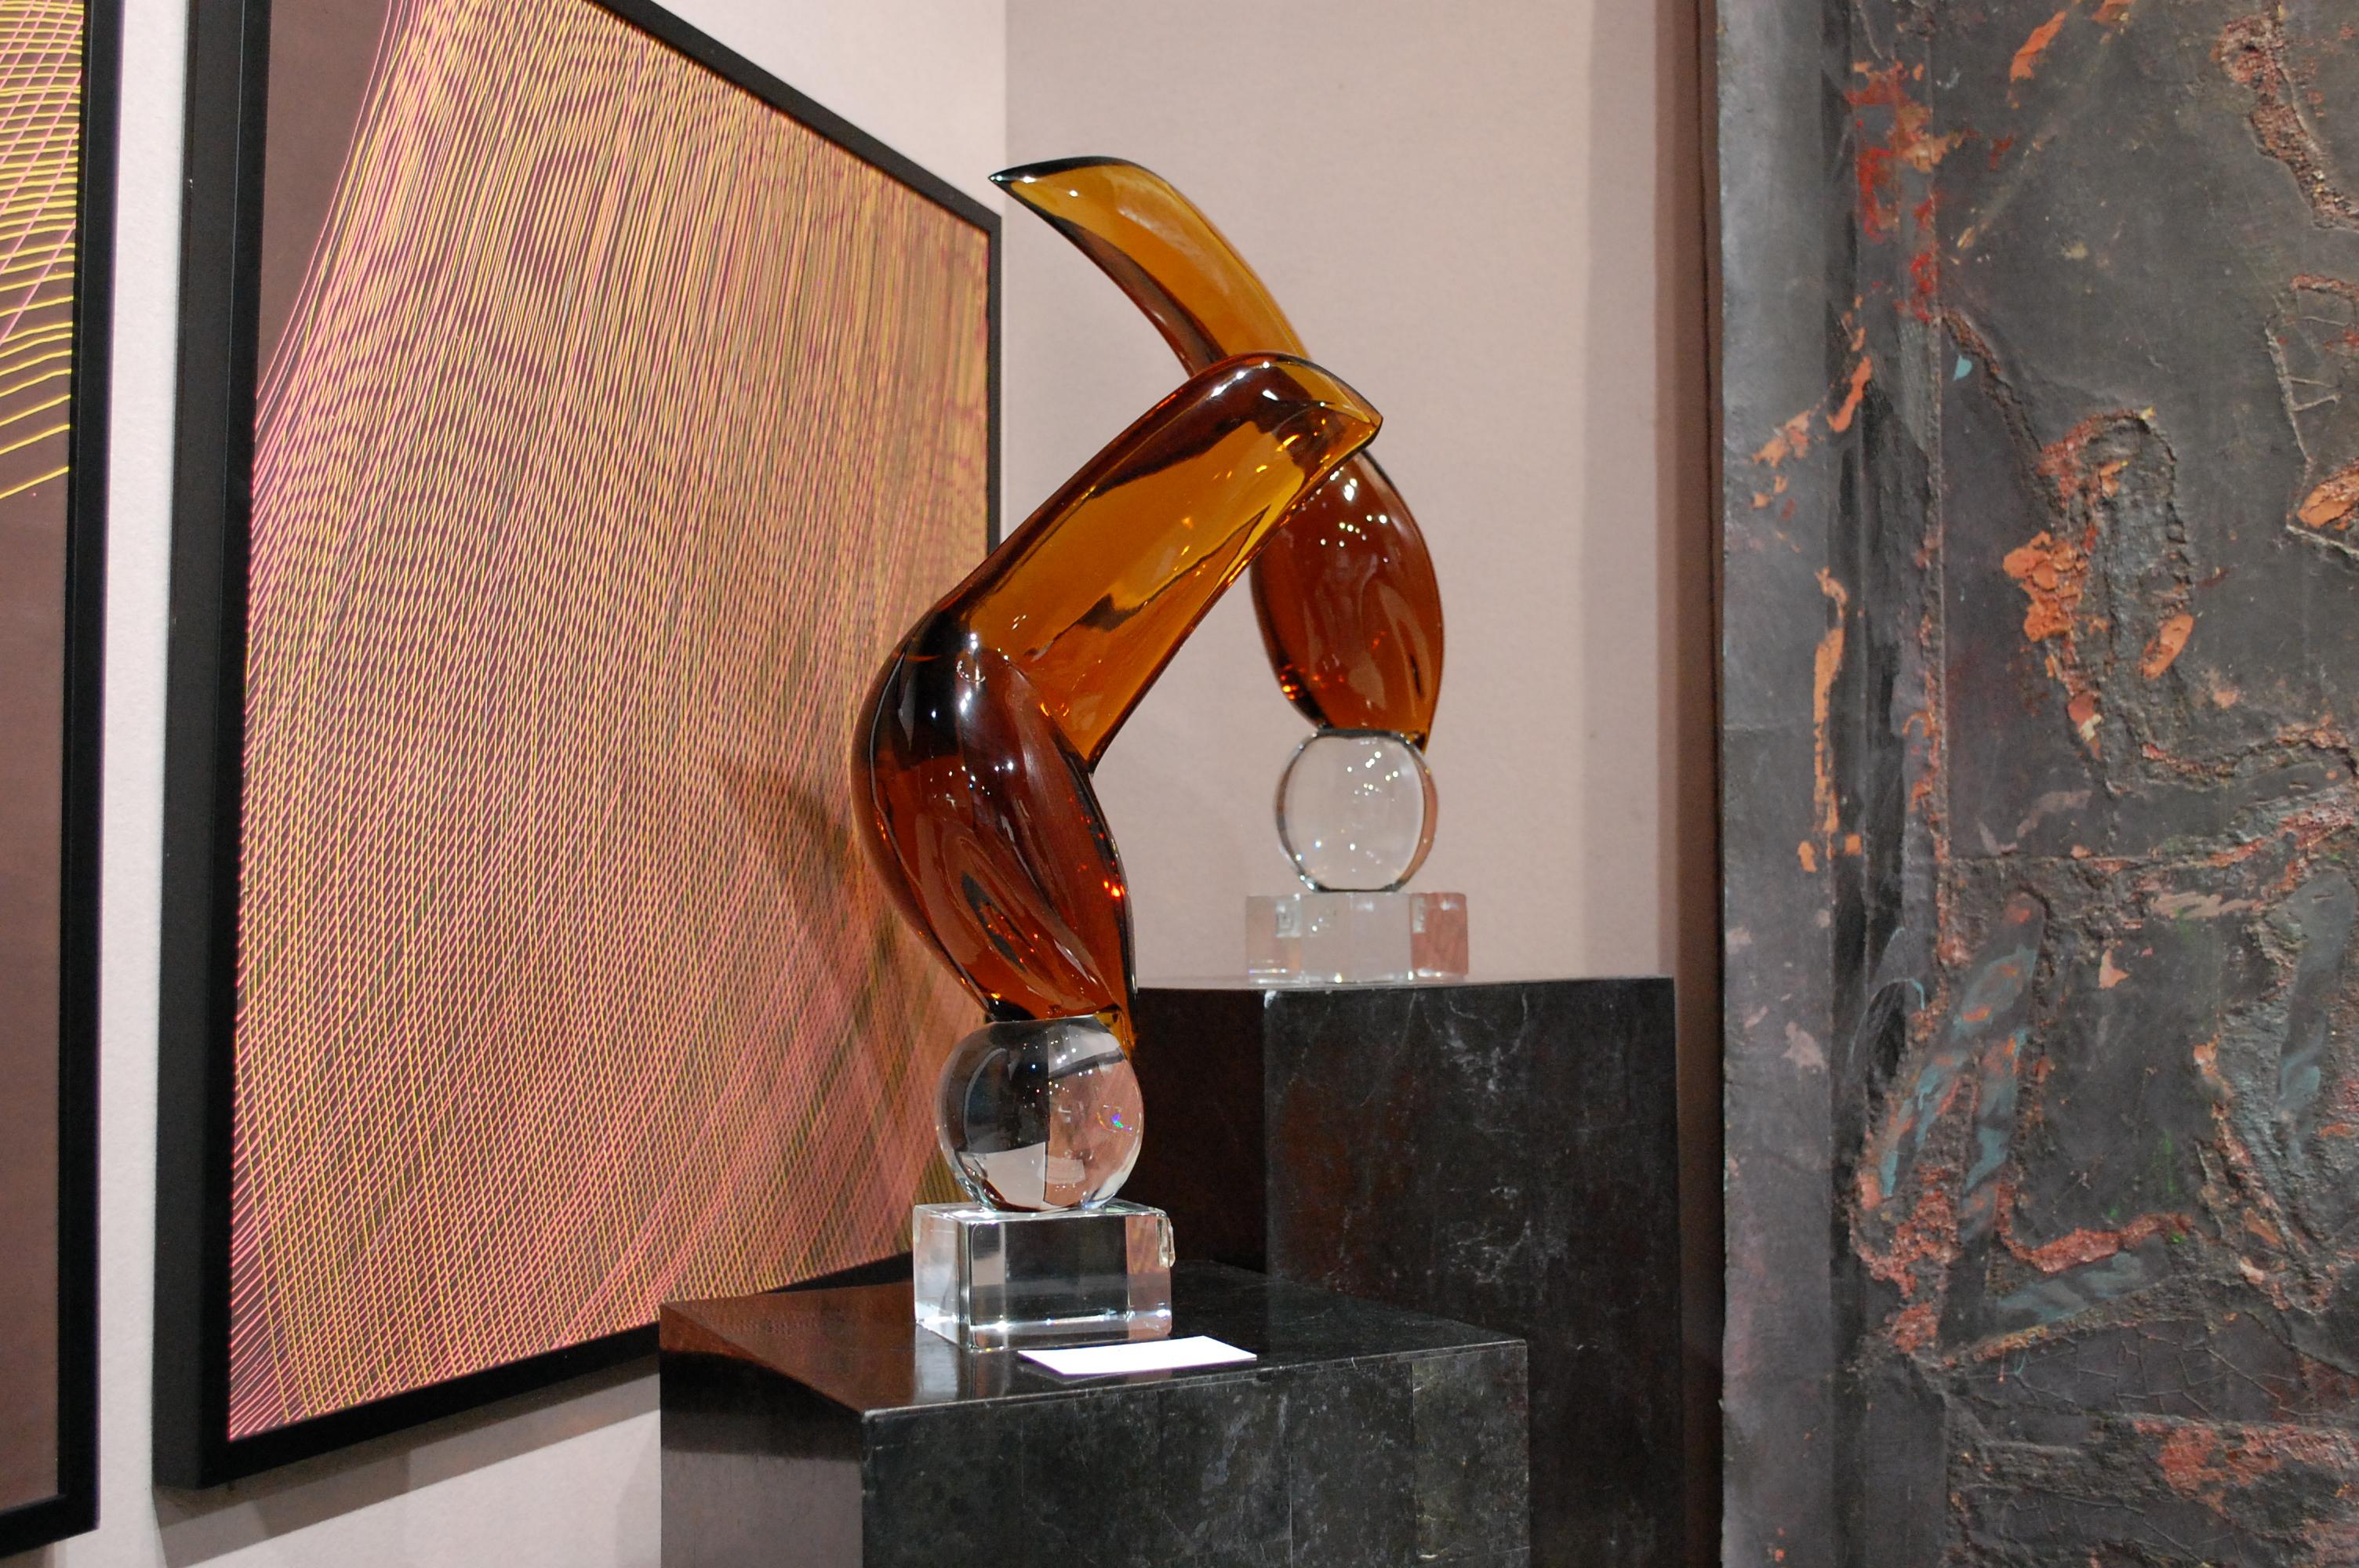 Pair of rare Murano handblown glass Toucans sculptures.
20